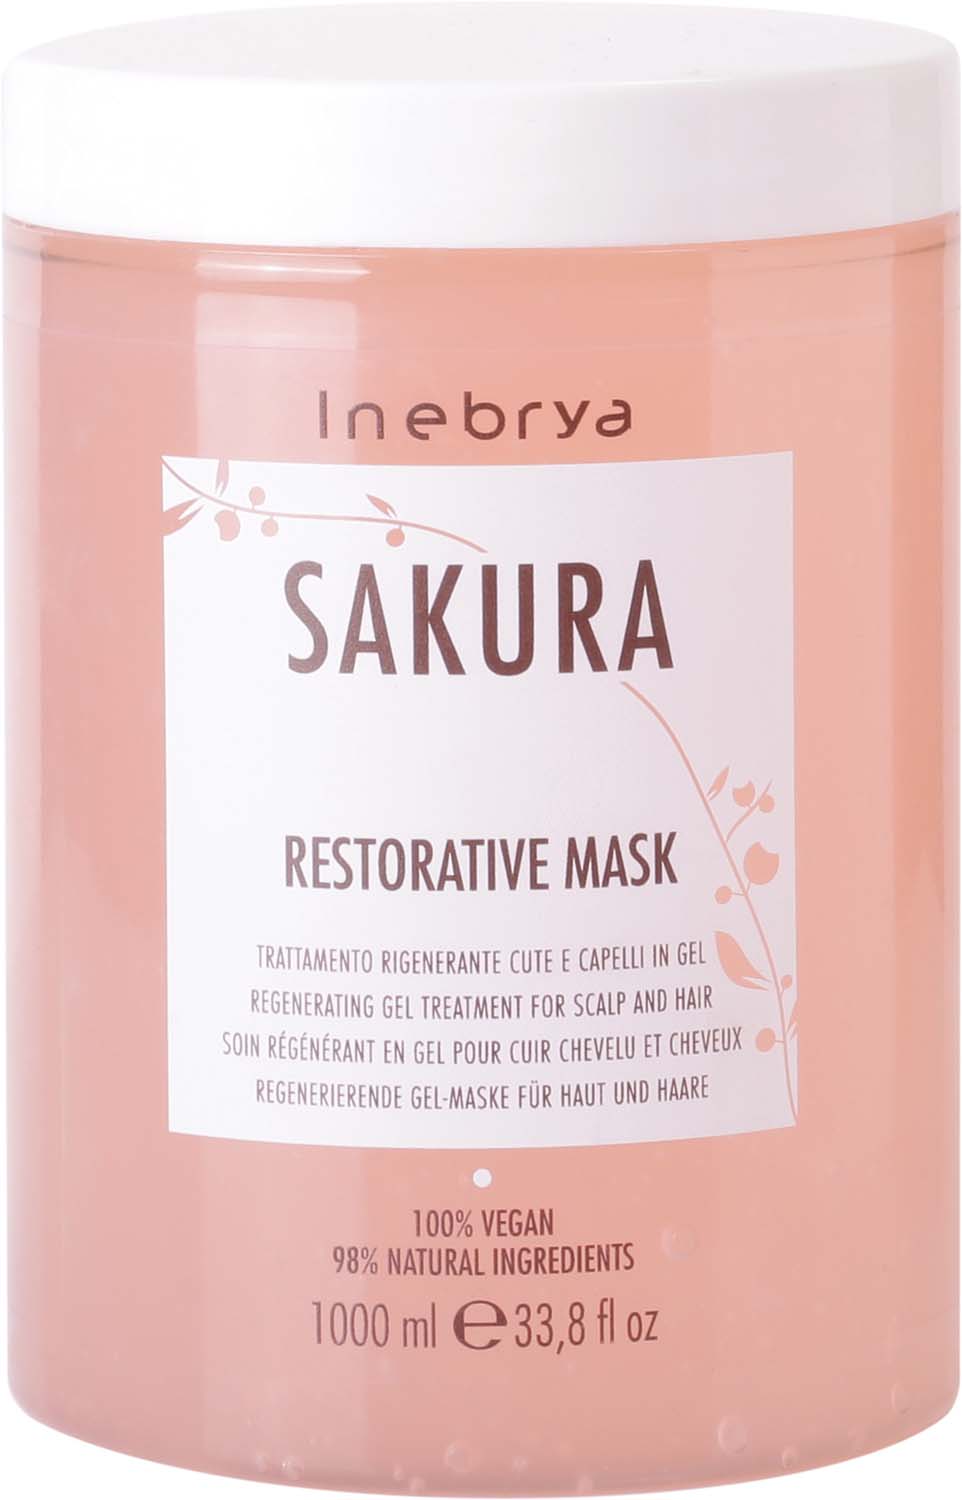 Inebrya Sakura Regenerative Maske